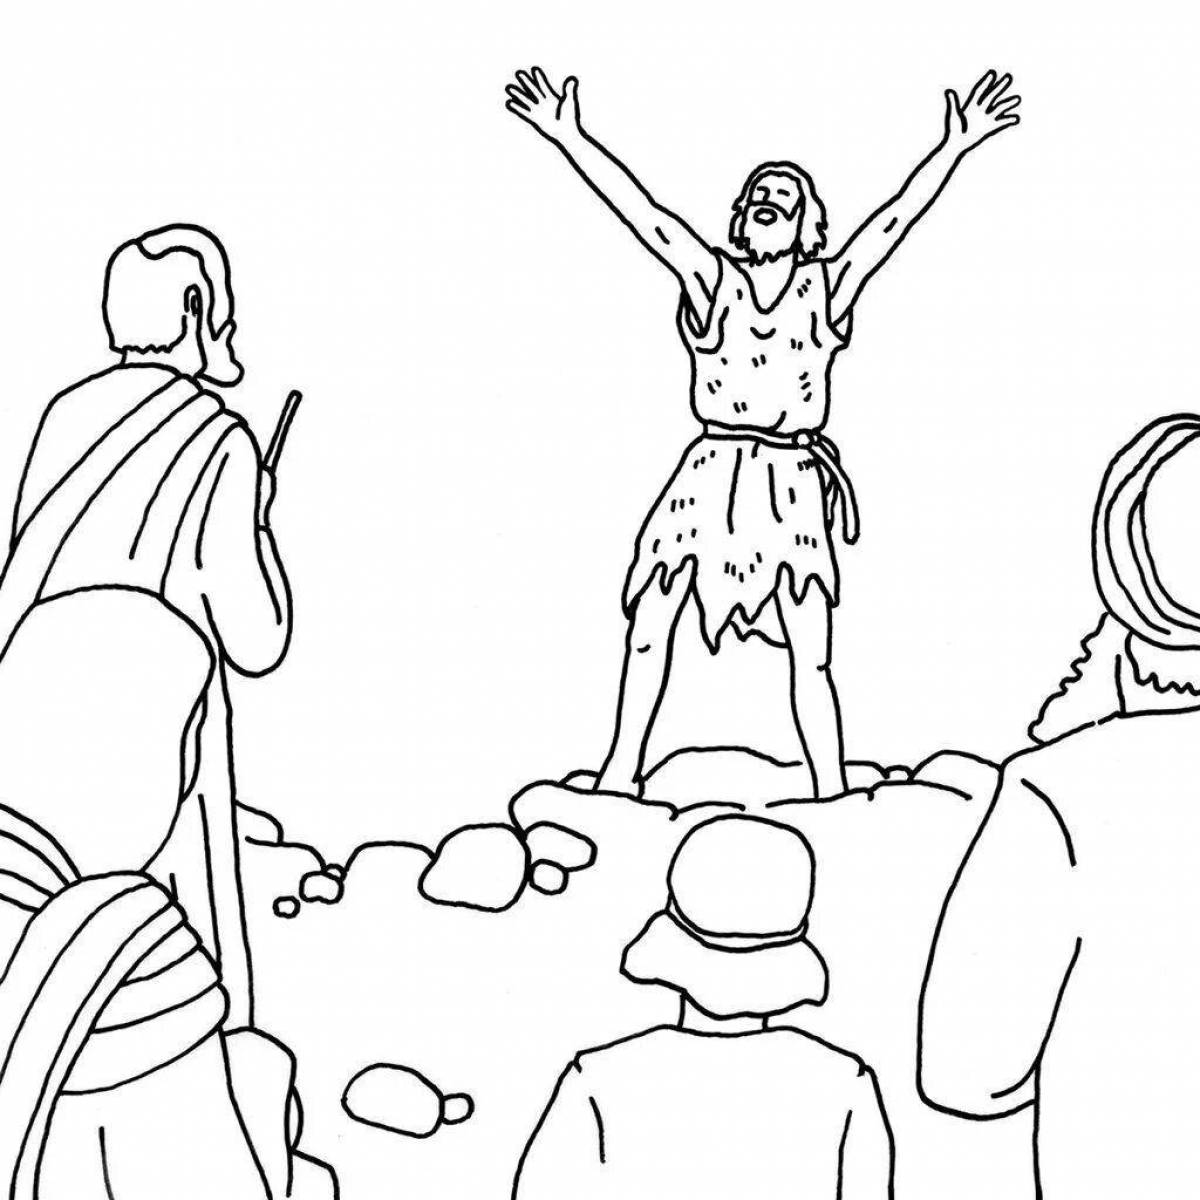 Brilliant coloring page baptism of jesus christ